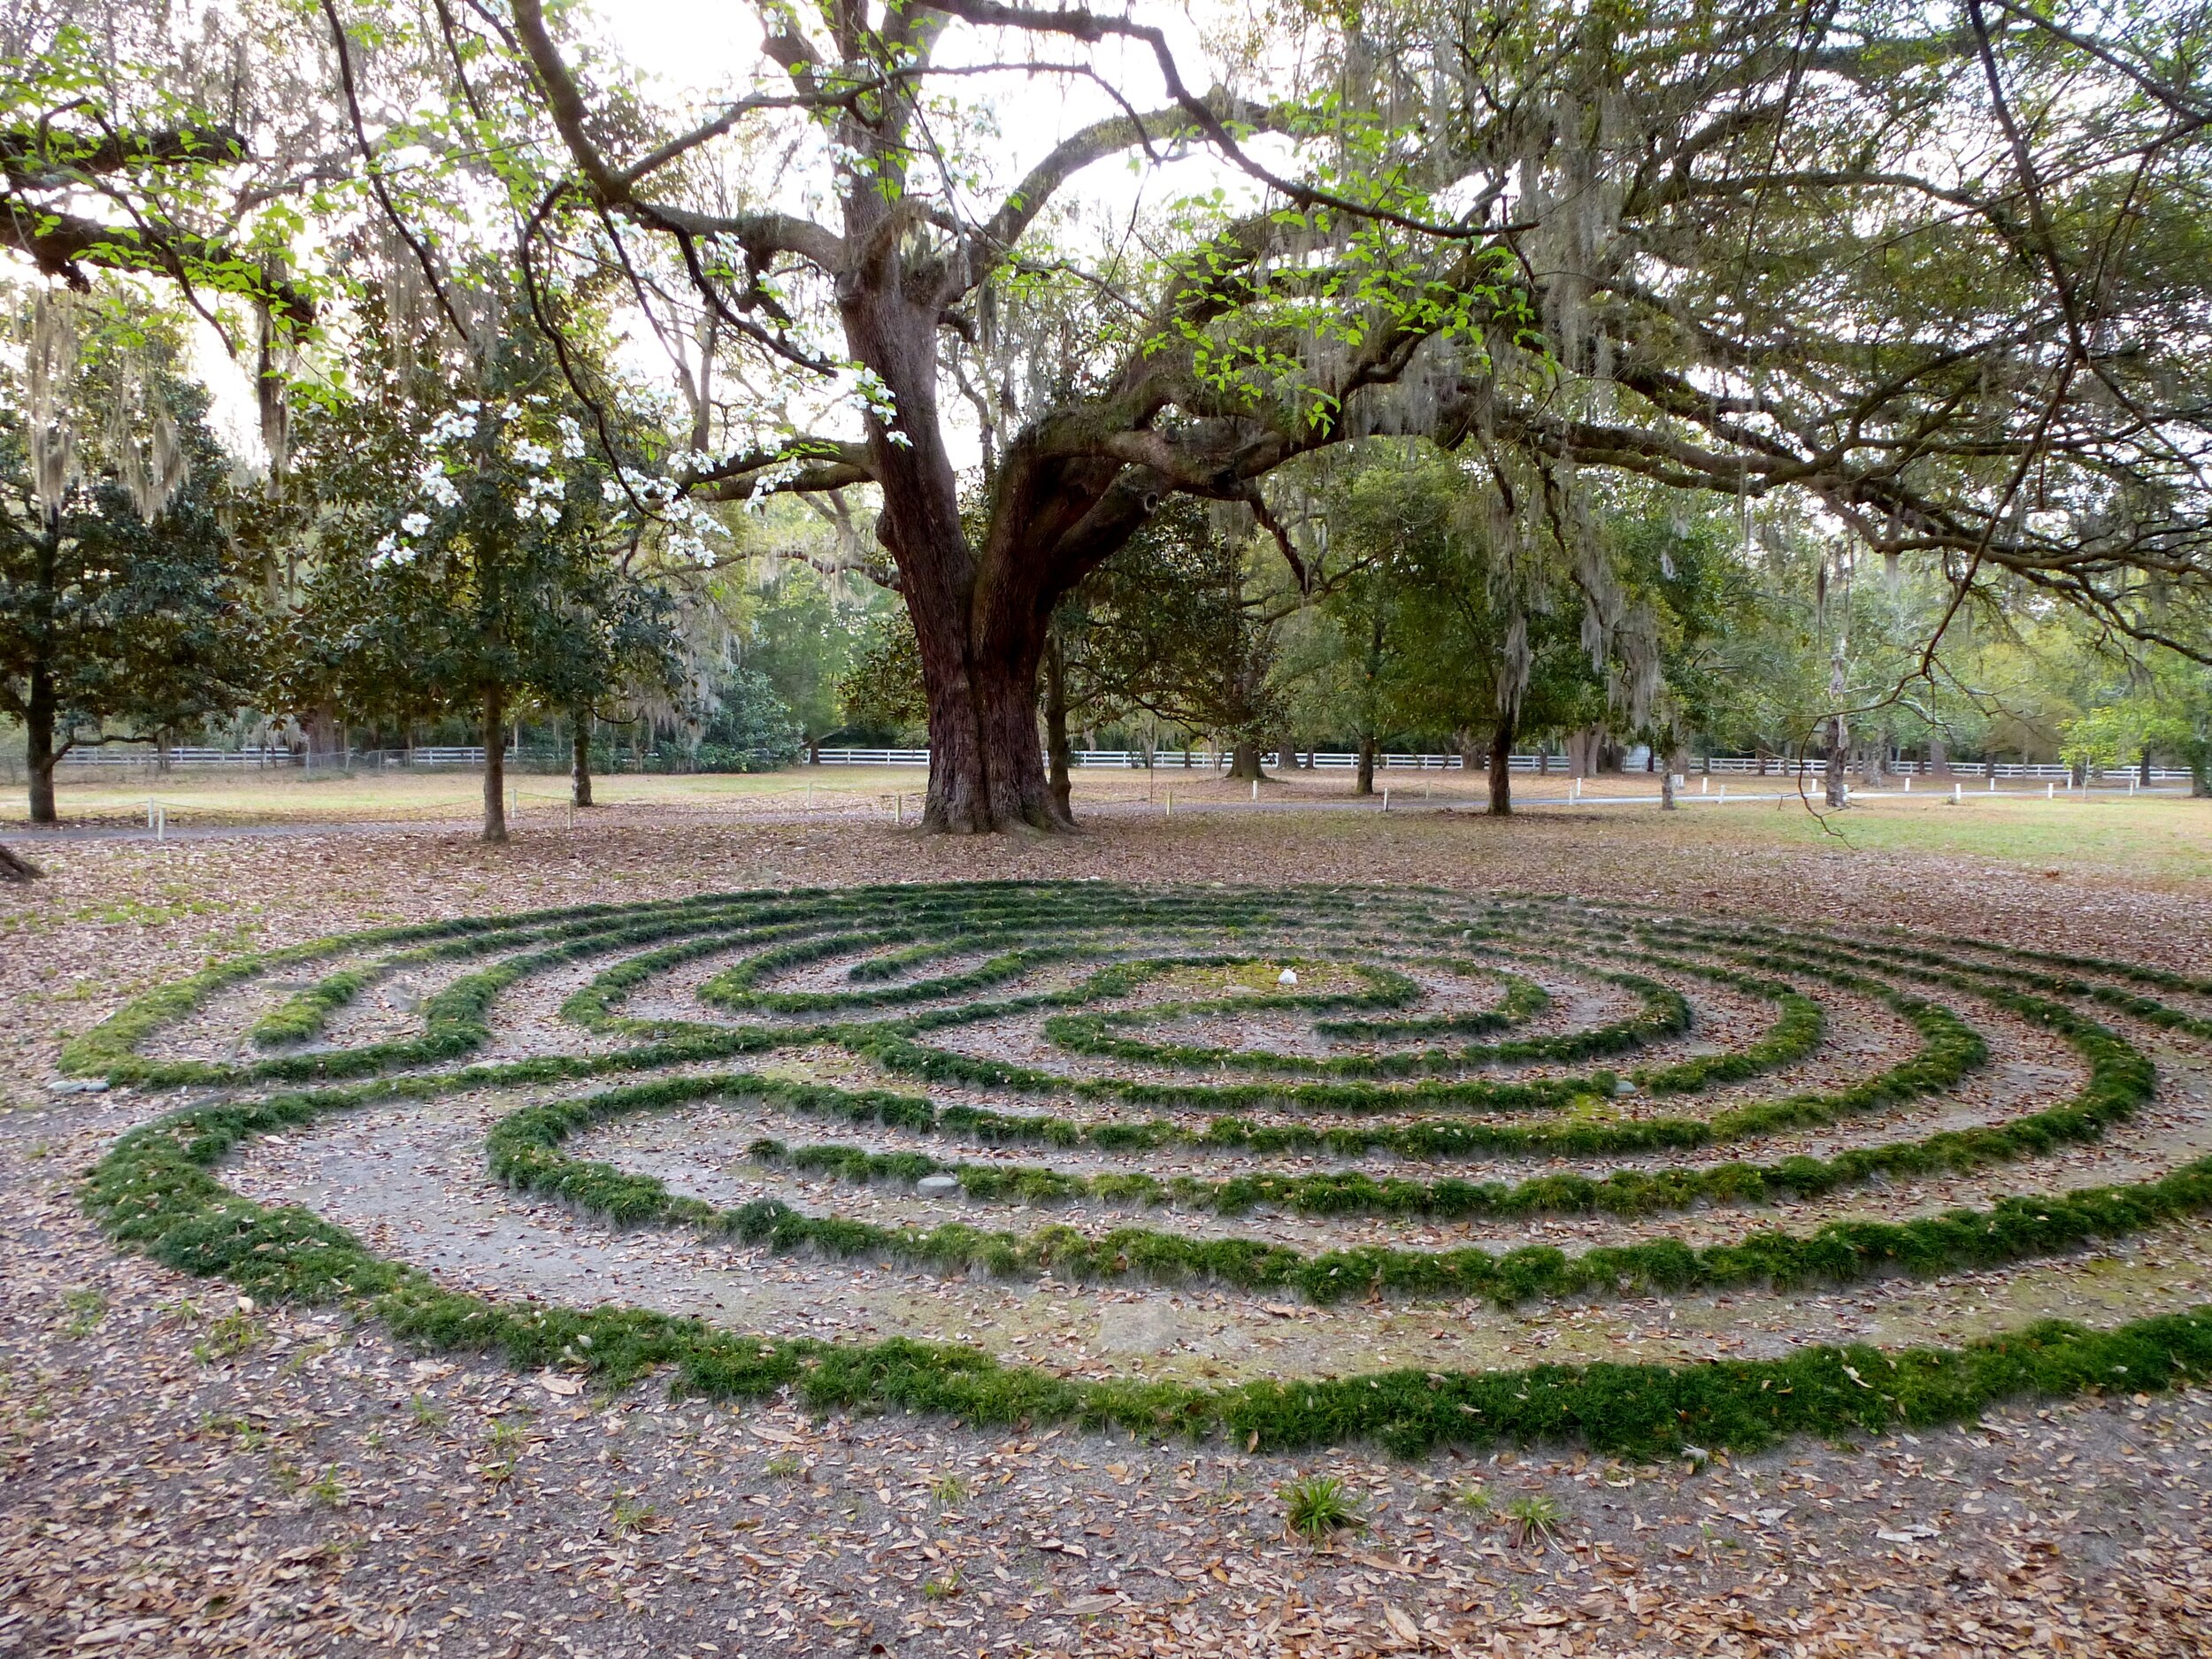 Labyrinth Meditation